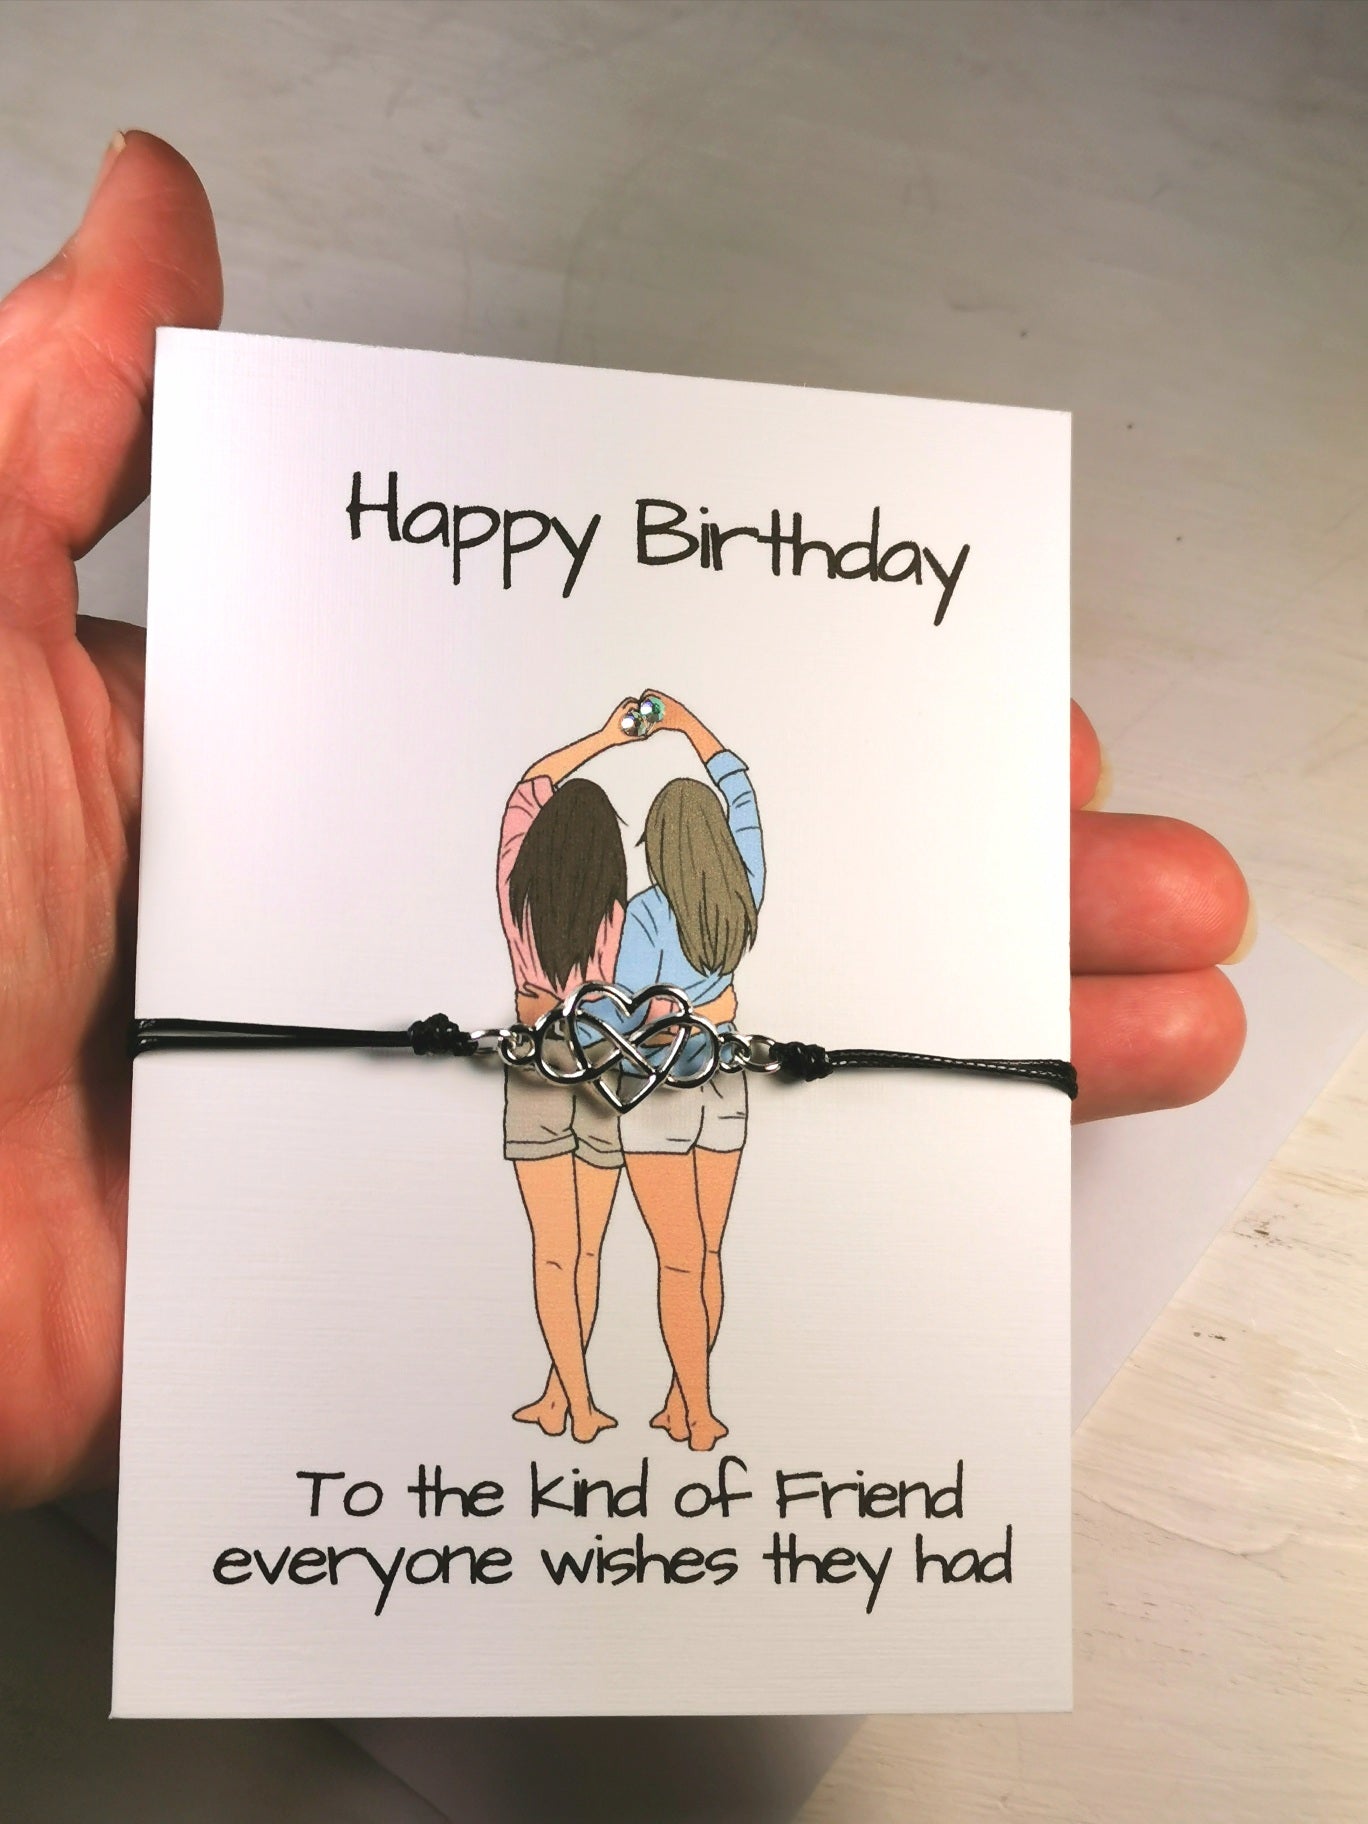 Happy Birthday Friendship Bracelet card | To the kind of friend everyone wishes they had | Birthday Bestie Bracelet Gift Card